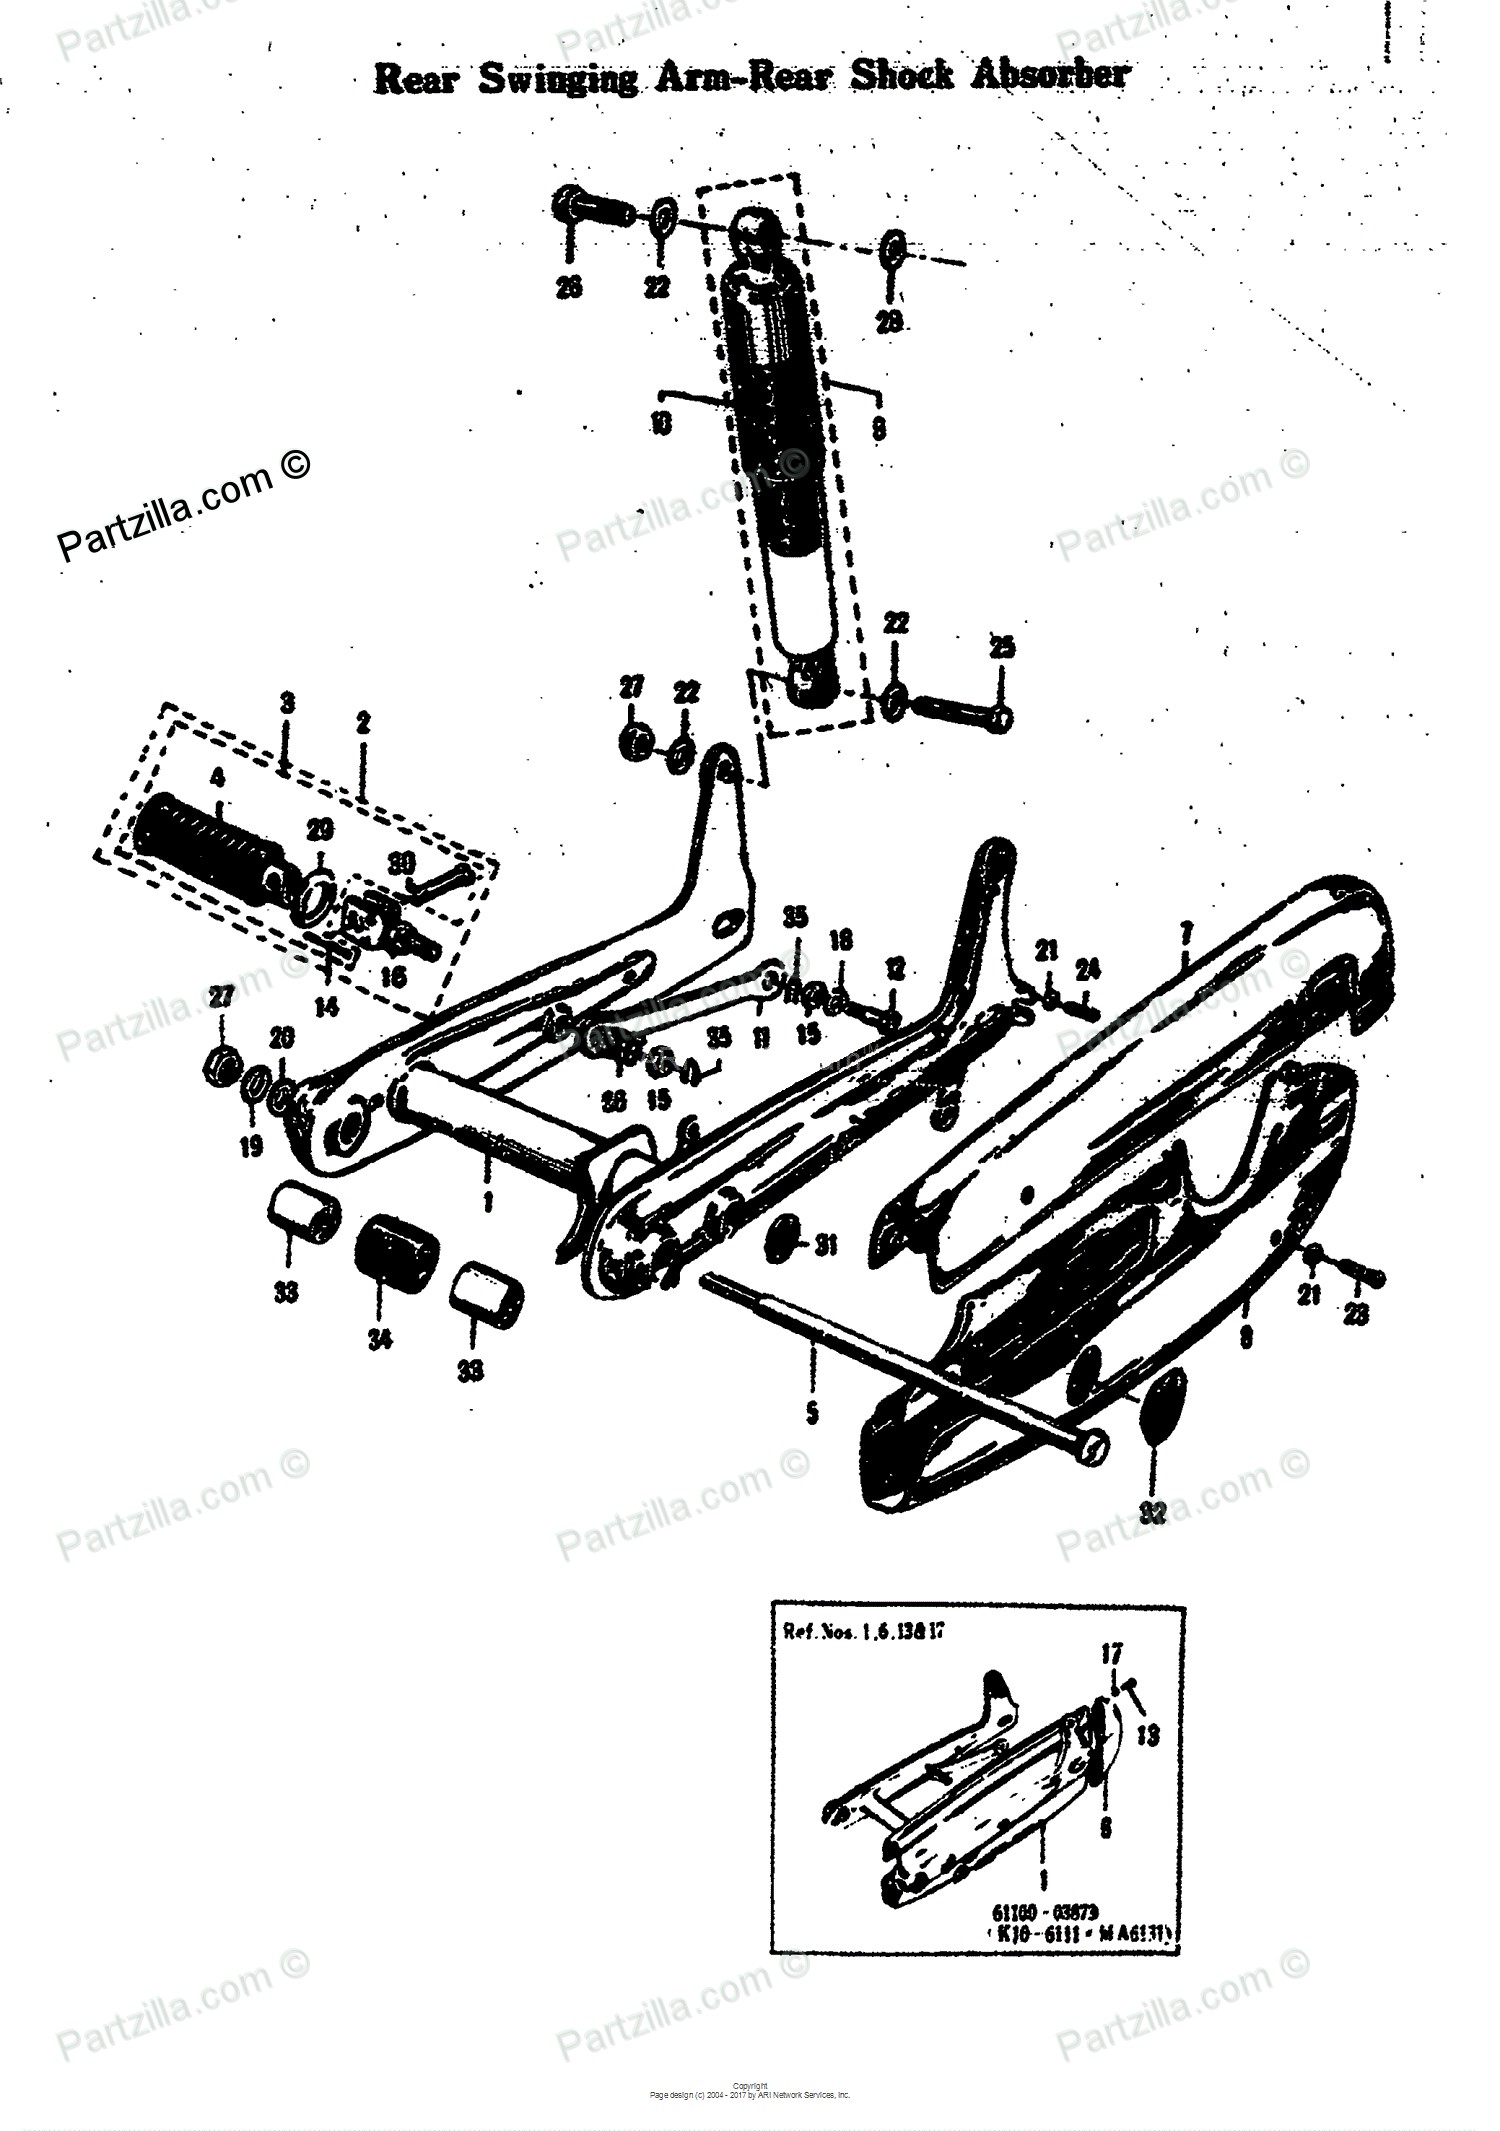 Car Shock Absorber Diagram Suzuki Motorcycle 1968 Oem Parts Diagram for Rear Swinging Arm Rear Of Car Shock Absorber Diagram